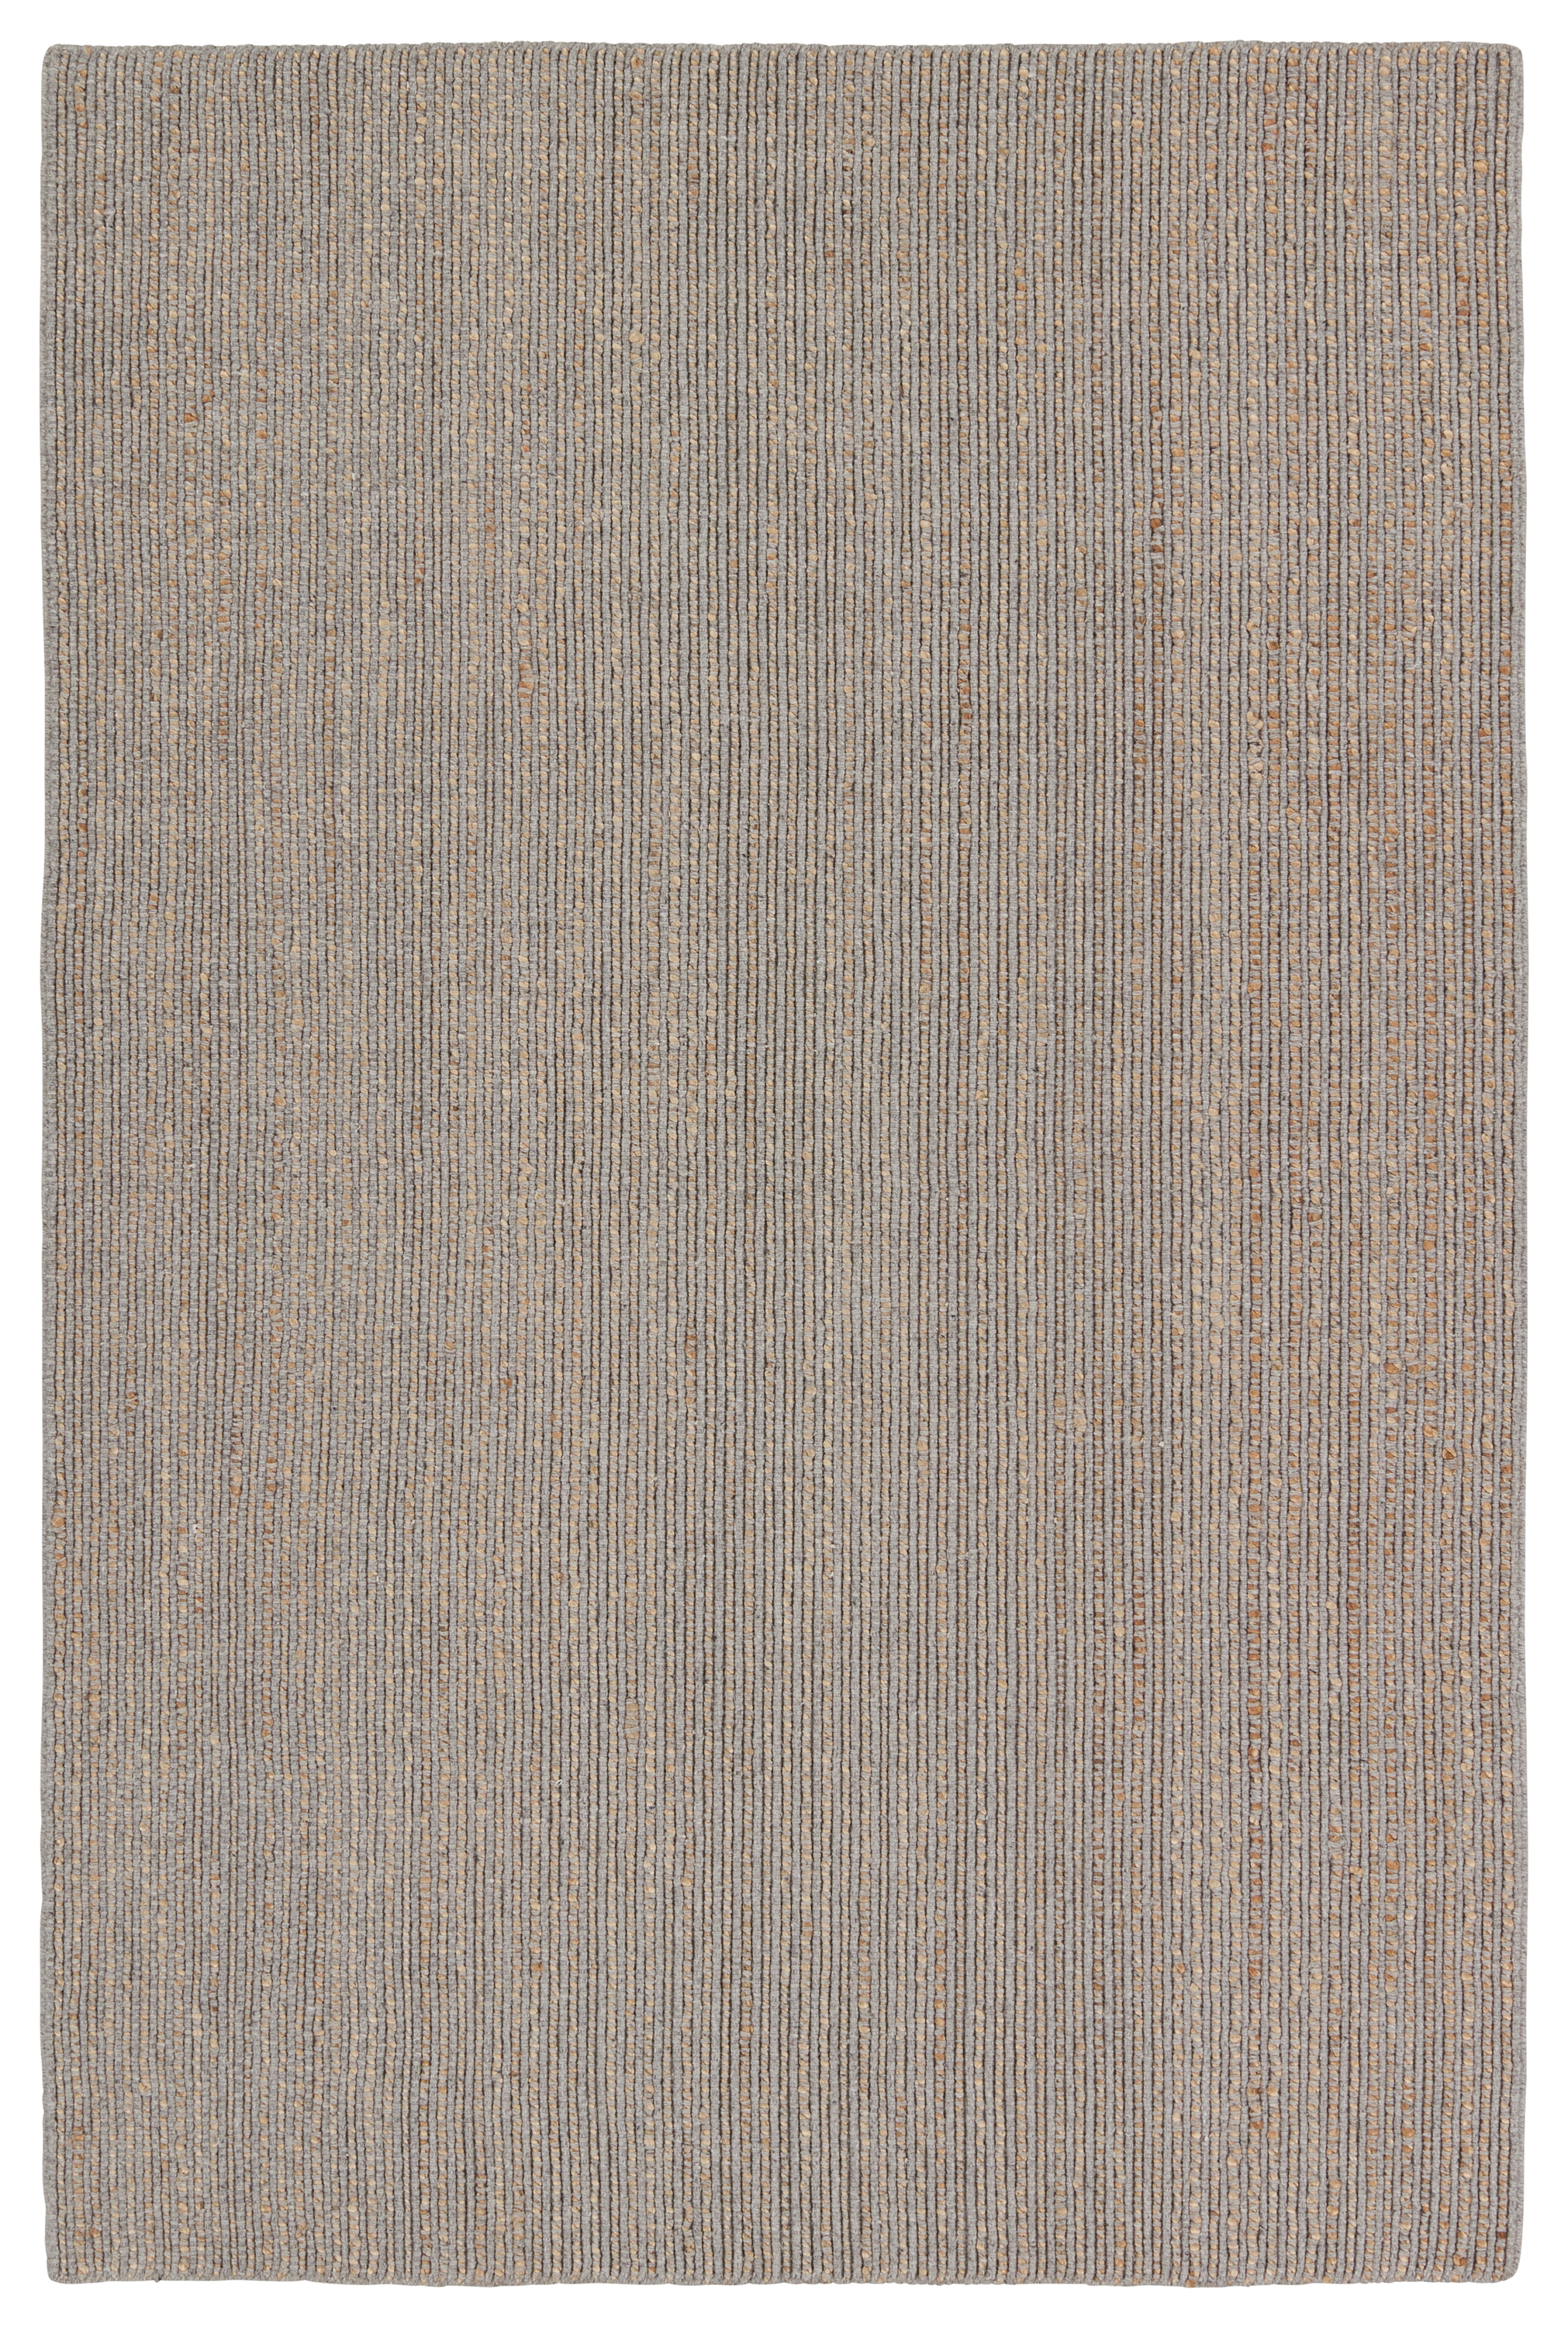 Latona Handmade Striped Gray/ Brown Area Rug (5'X8') - Image 0